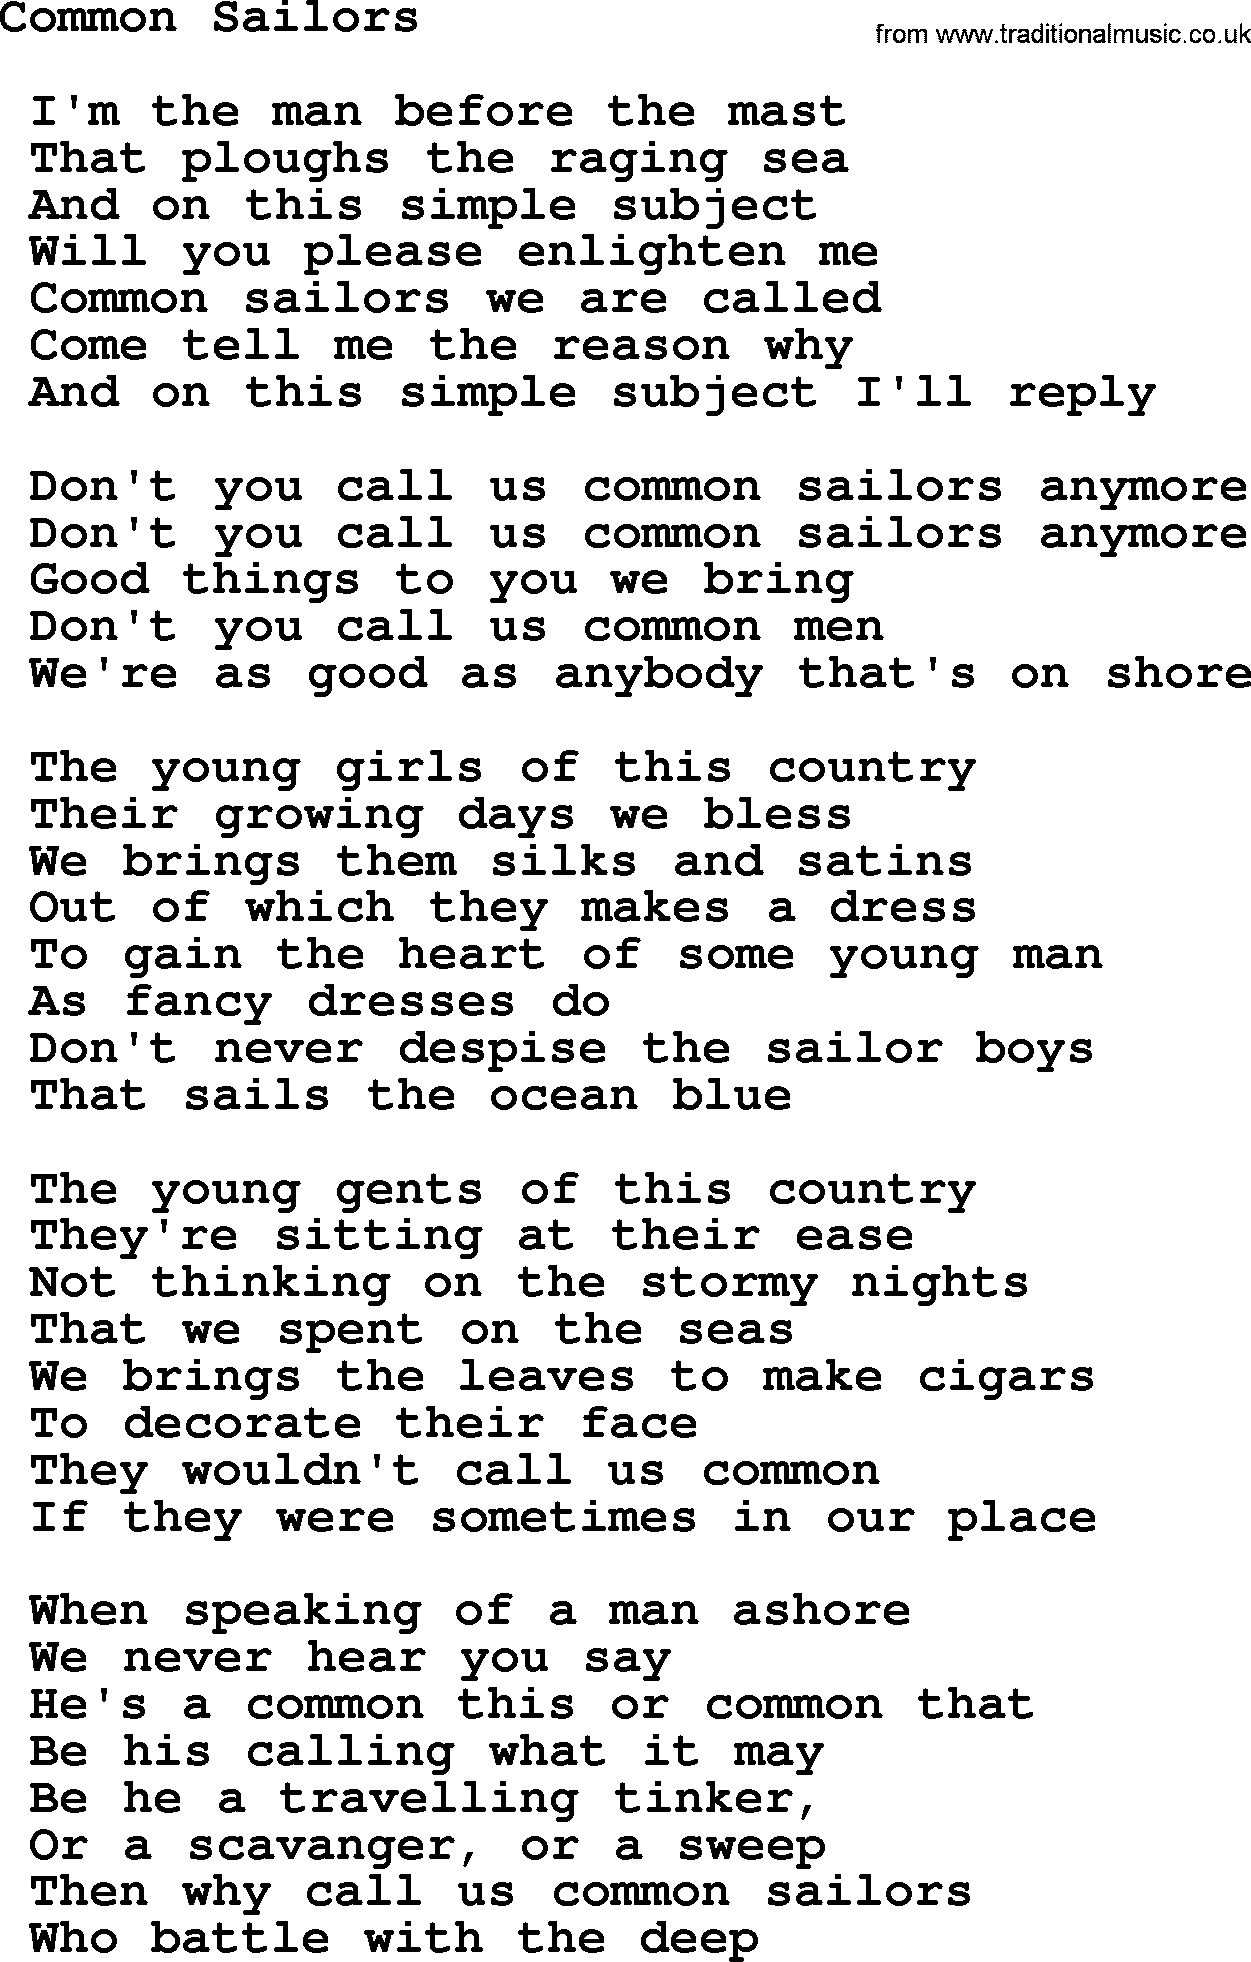 Sea Song or Shantie: Common Sailors, lyrics